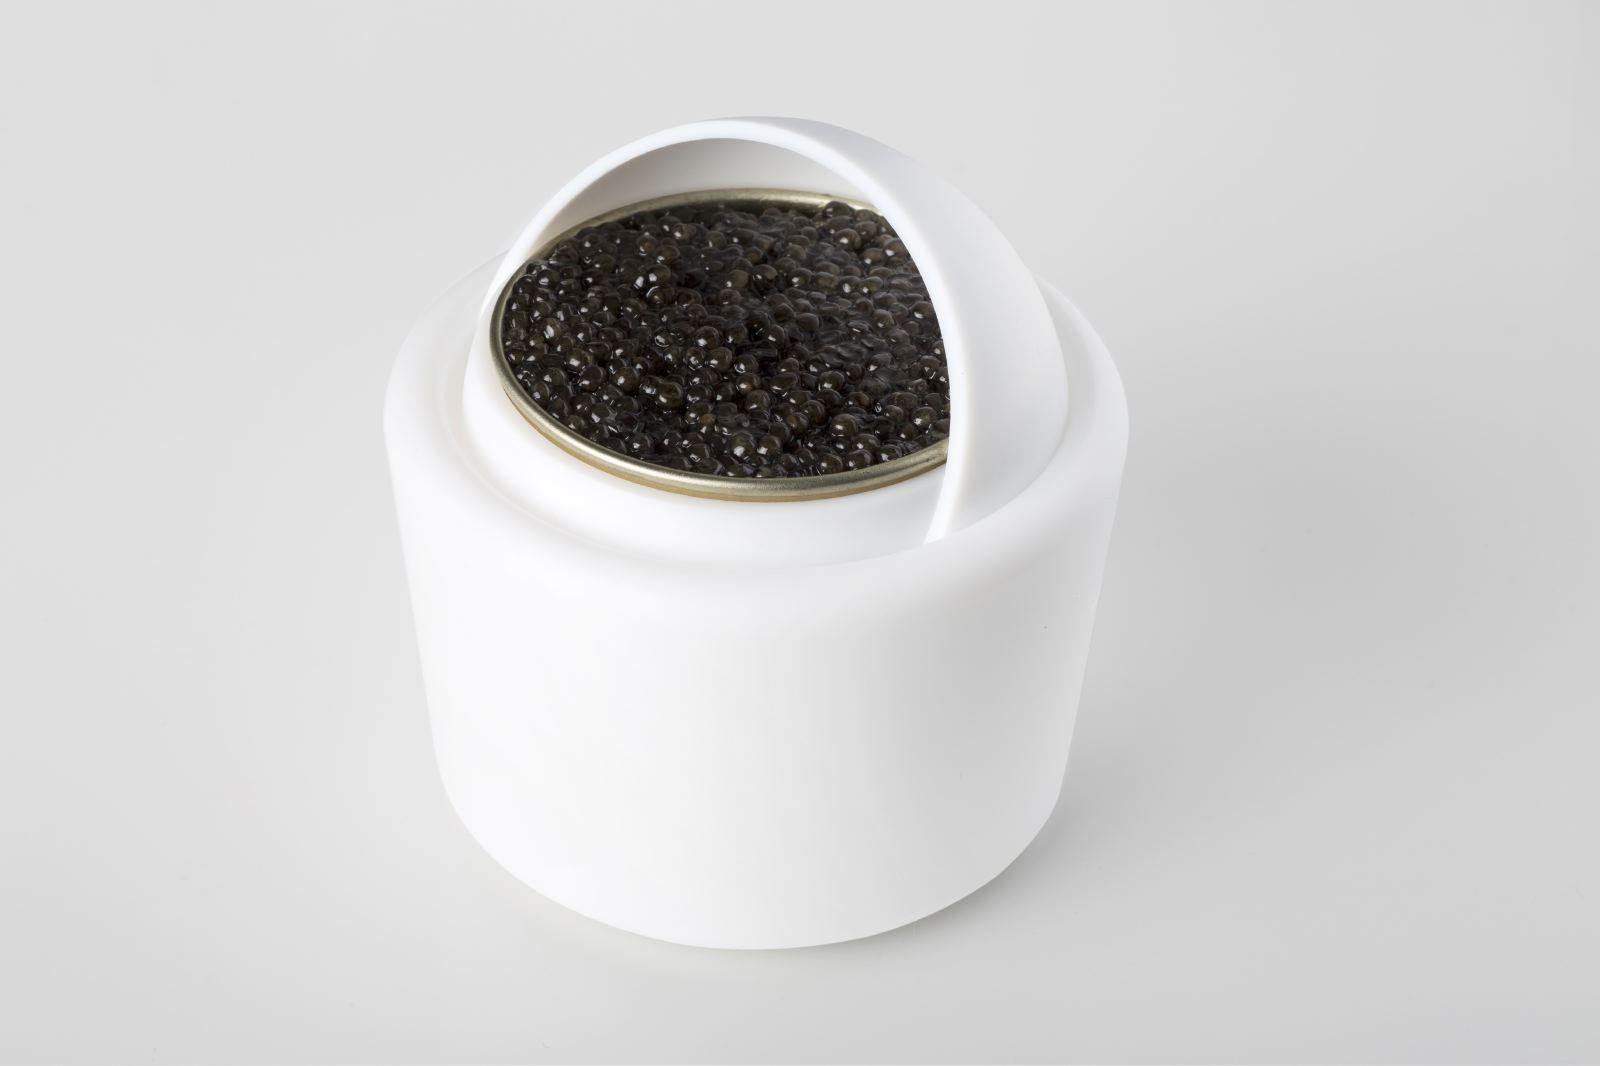 Jewel box for caviar (opened)